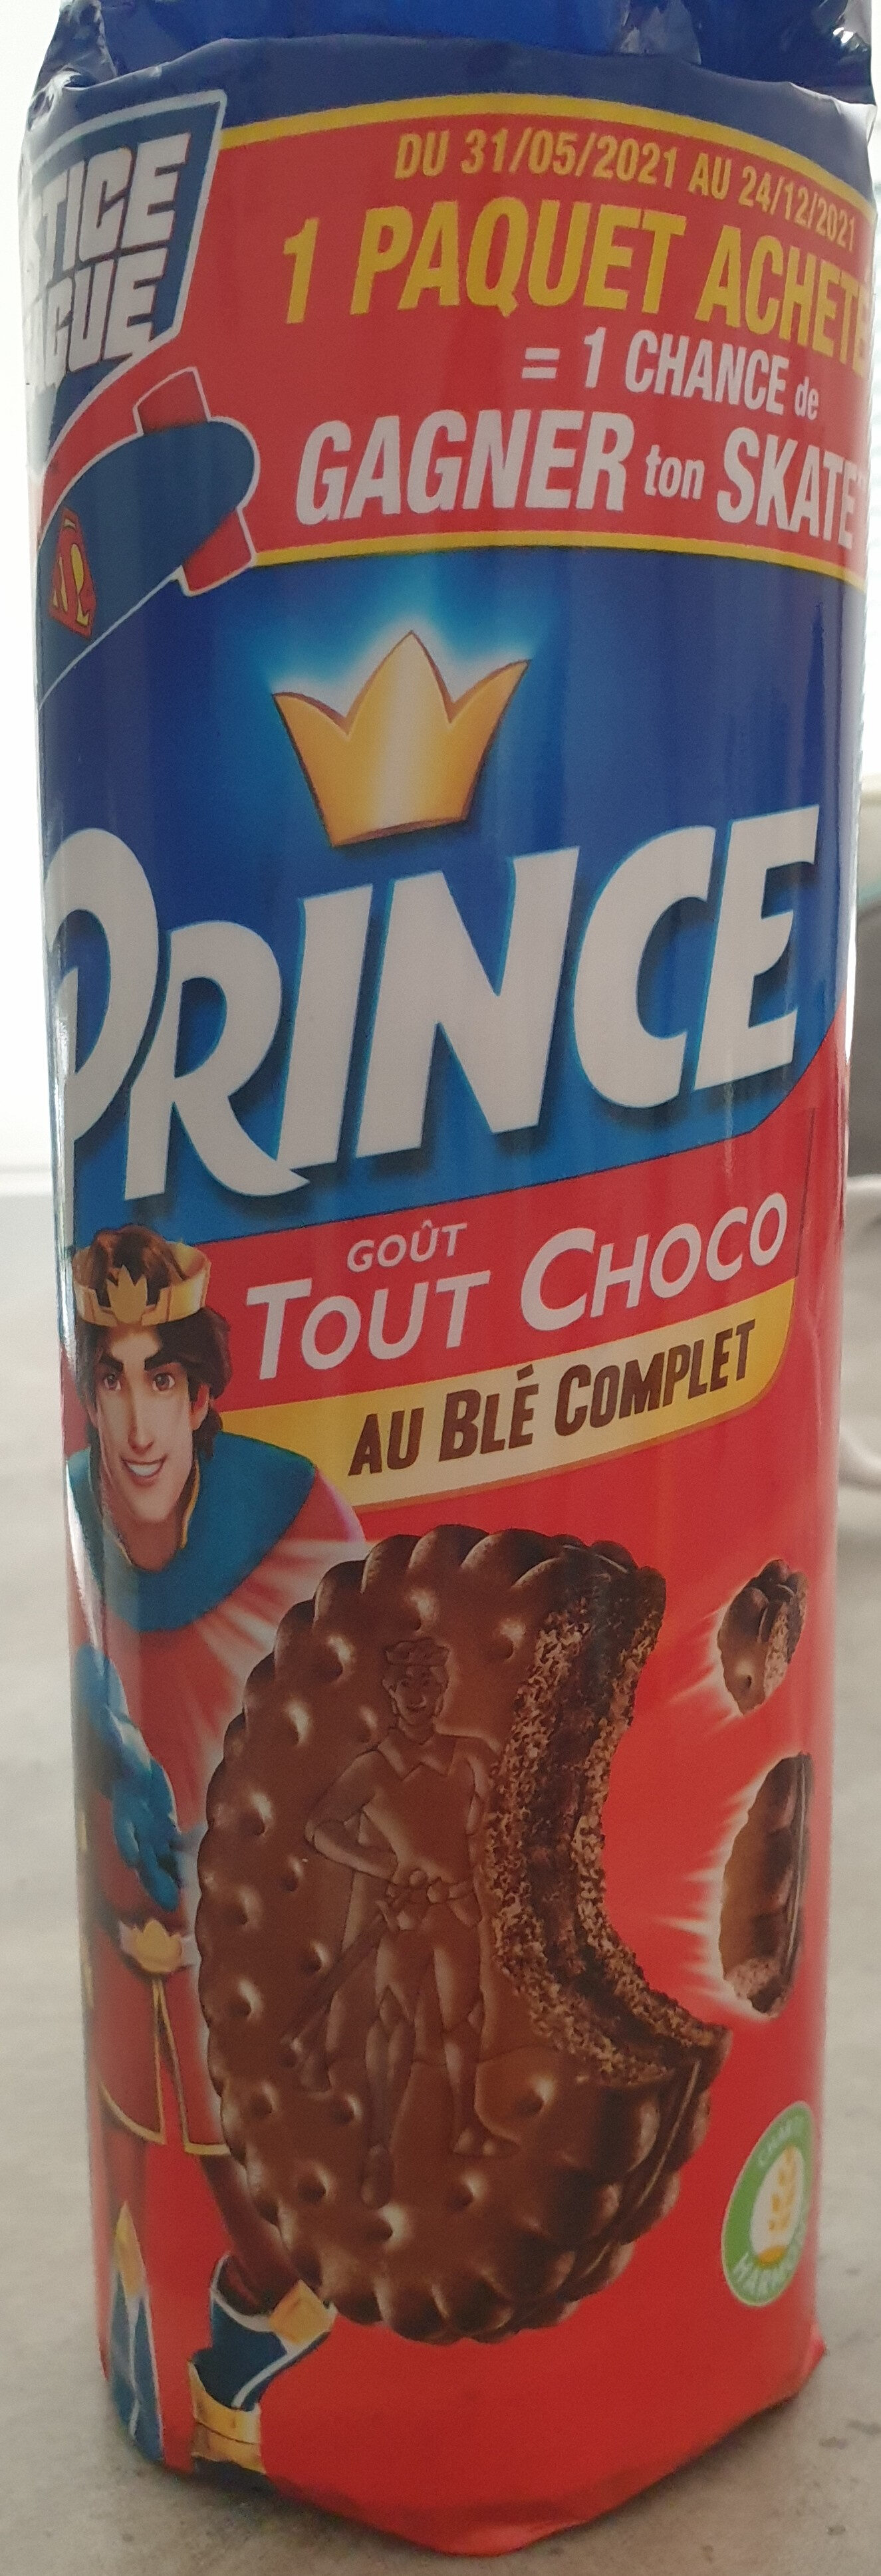 Prince goût tout choco - Product - fr